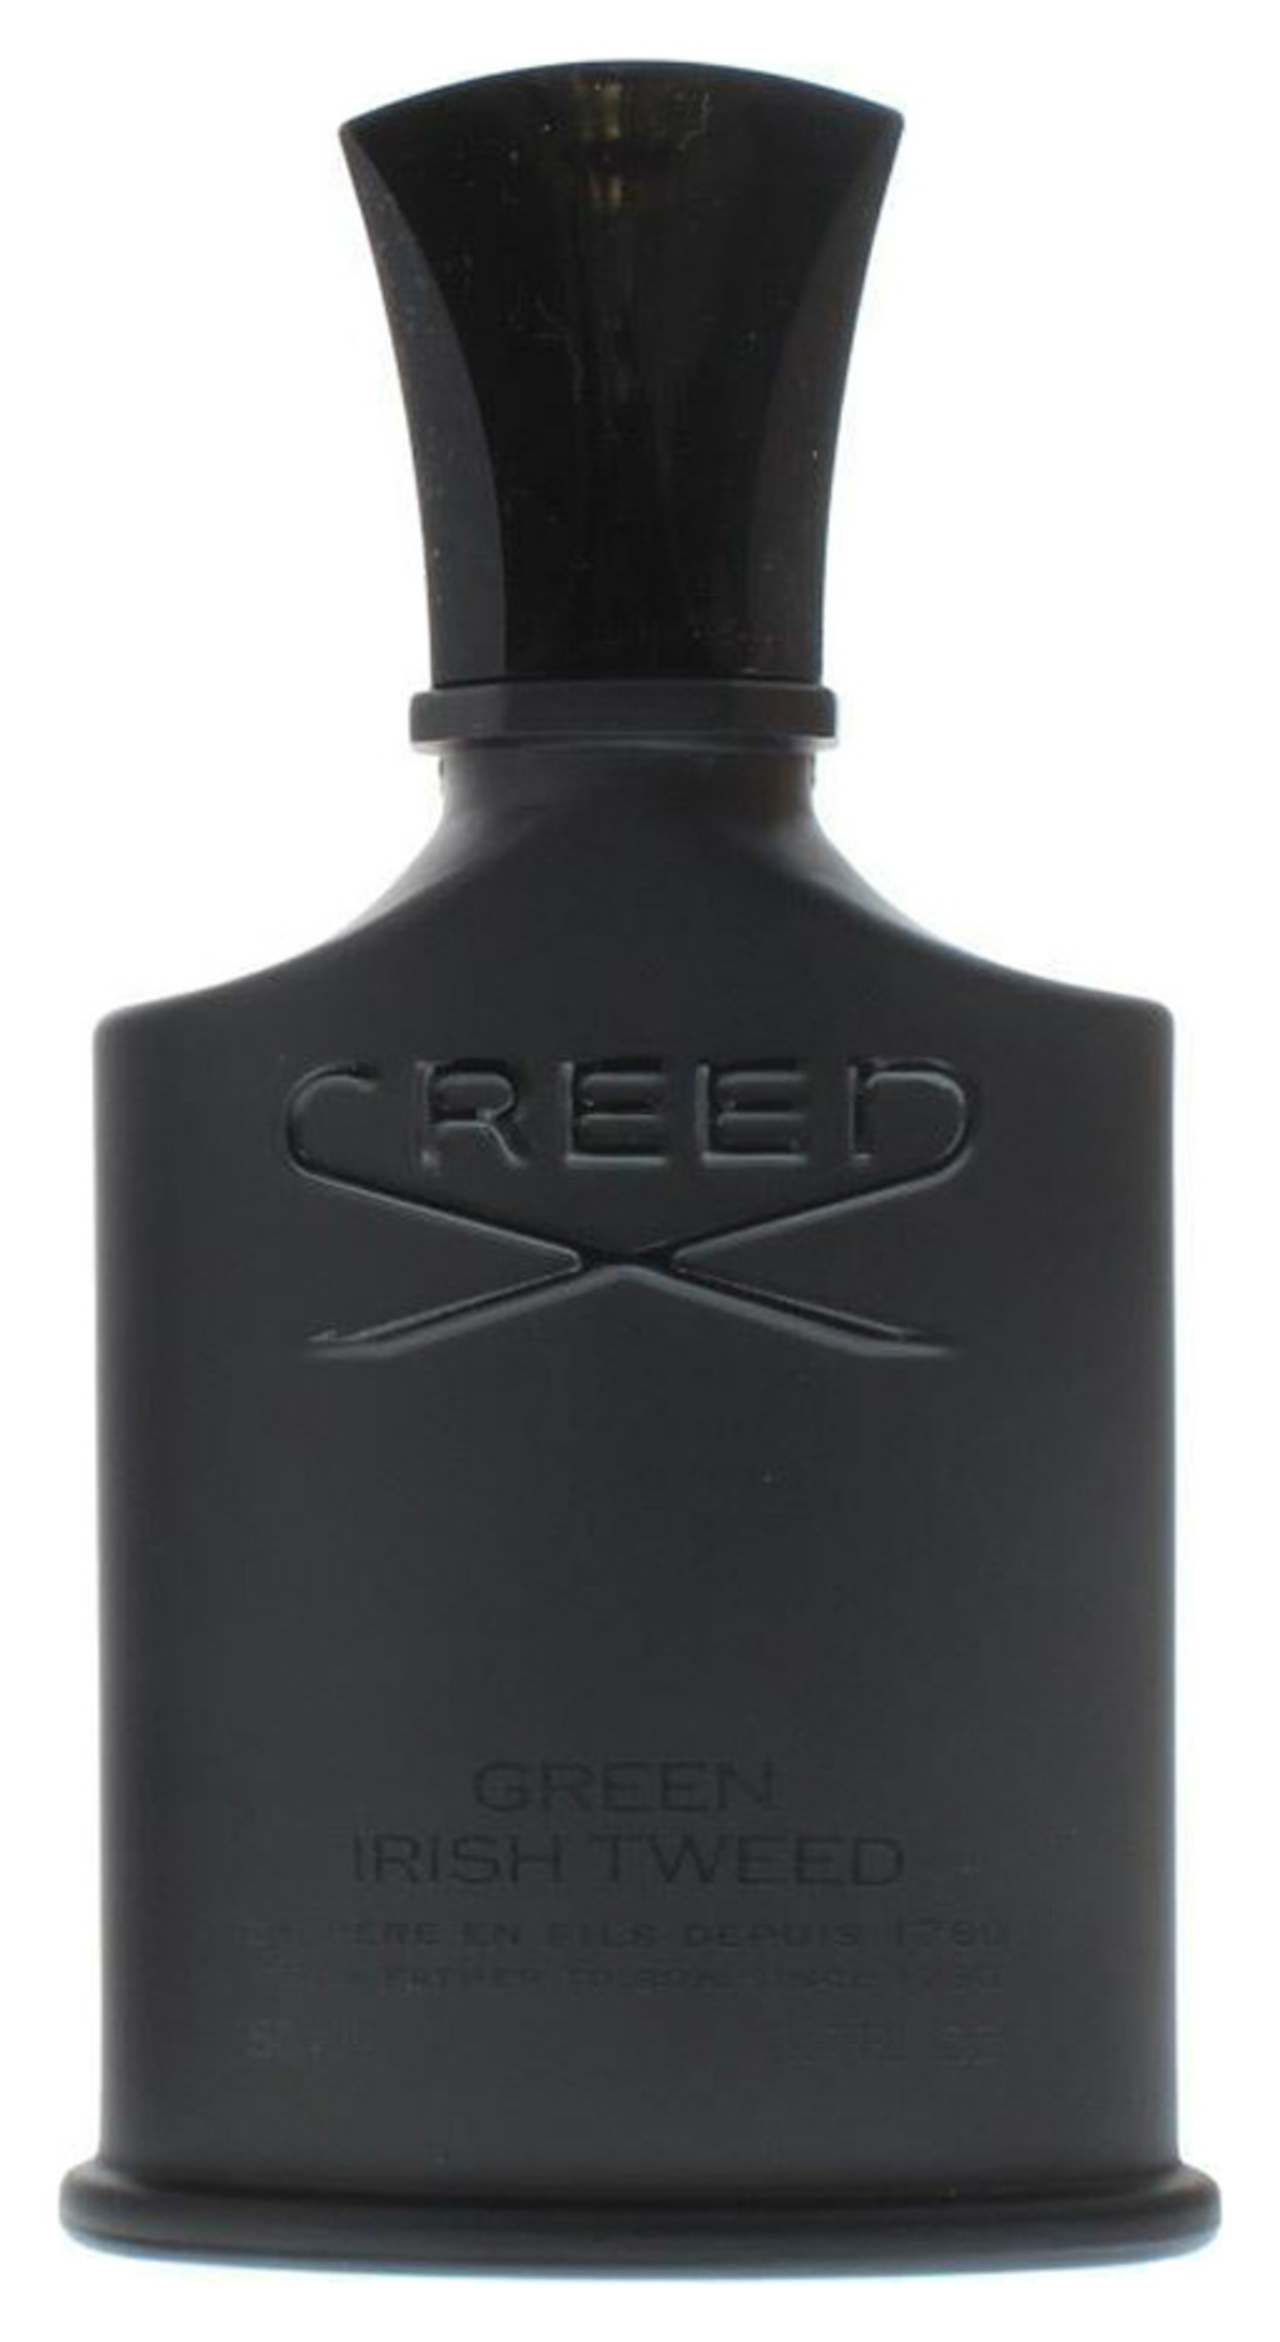 Creed Green Irish Tweed 50мл. Creed Green Irish Tweed EDP 50 ml. Creed Green Irish Tweed парфюмерная вода 100 мл. Туалетная вода мужская Creed Green Irish Tweed. Creed irish